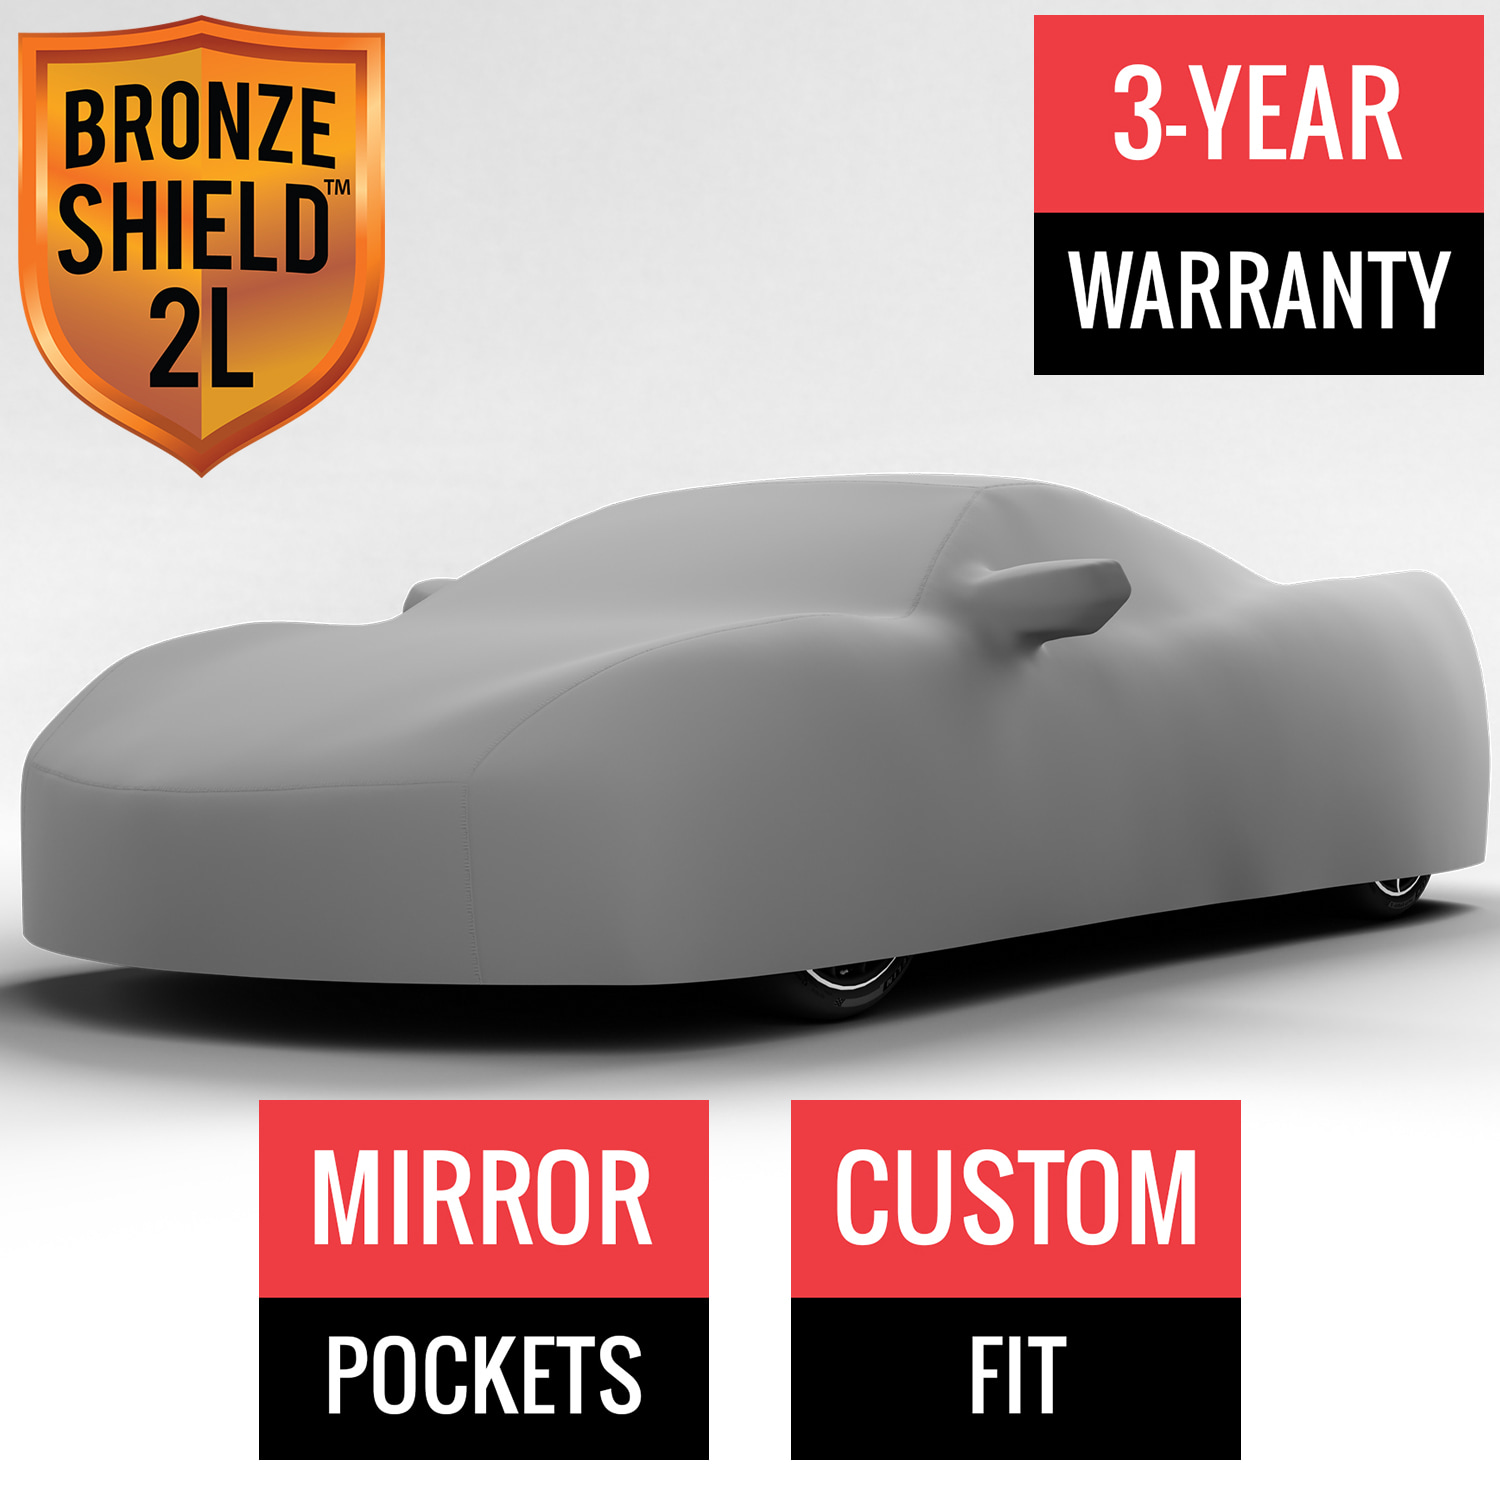 Bronze Shield 2L - Car Cover for Chevrolet Corvette Grand Sport 2020 Convertible 2-Door